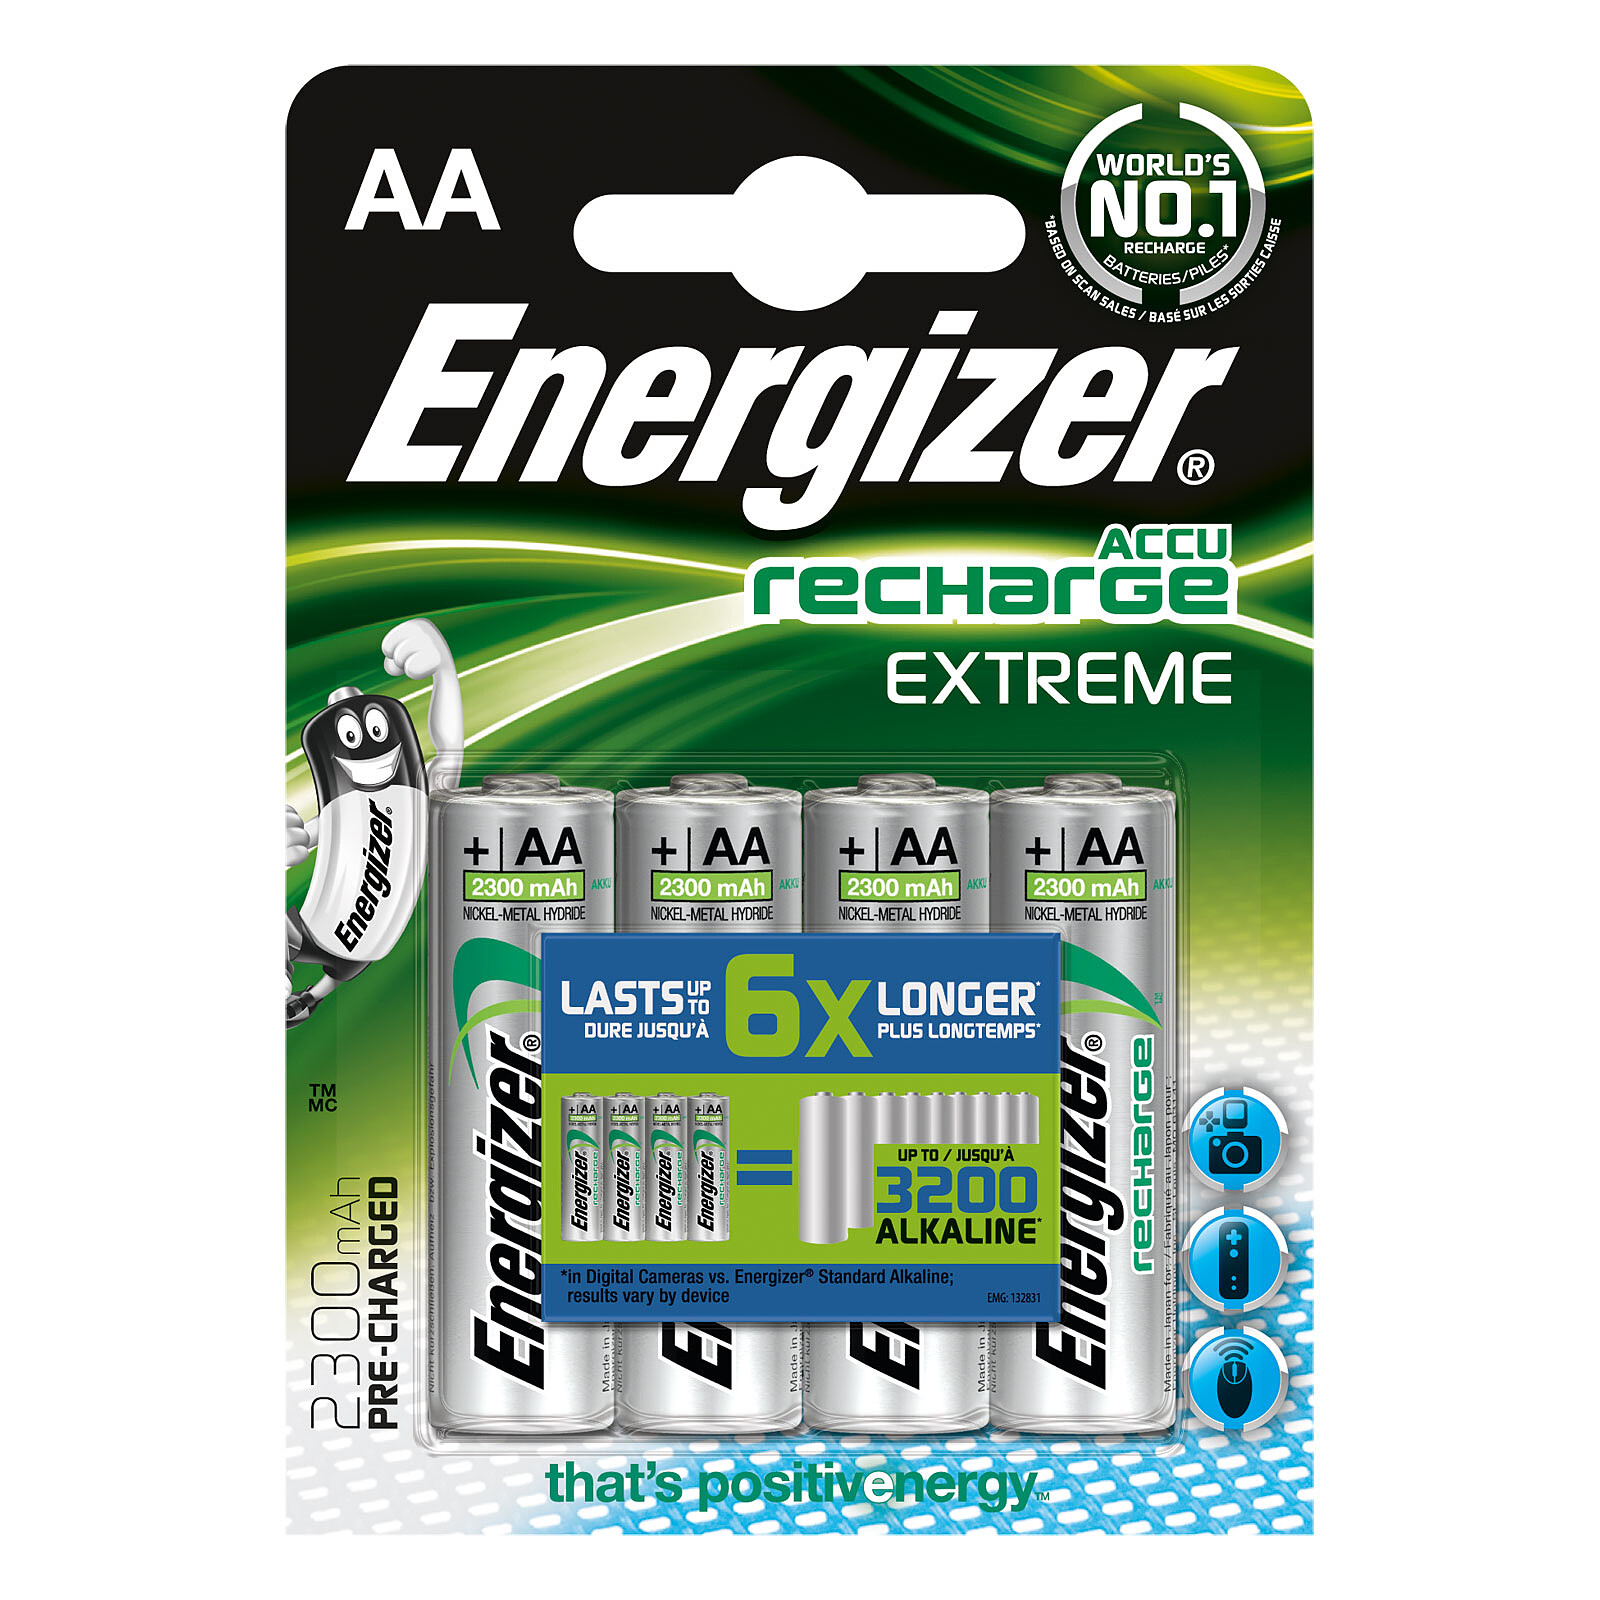 Energizer Chargeur pour piles rechargeables AA et AAA (Recharge Pro) avec 4  piles recharge